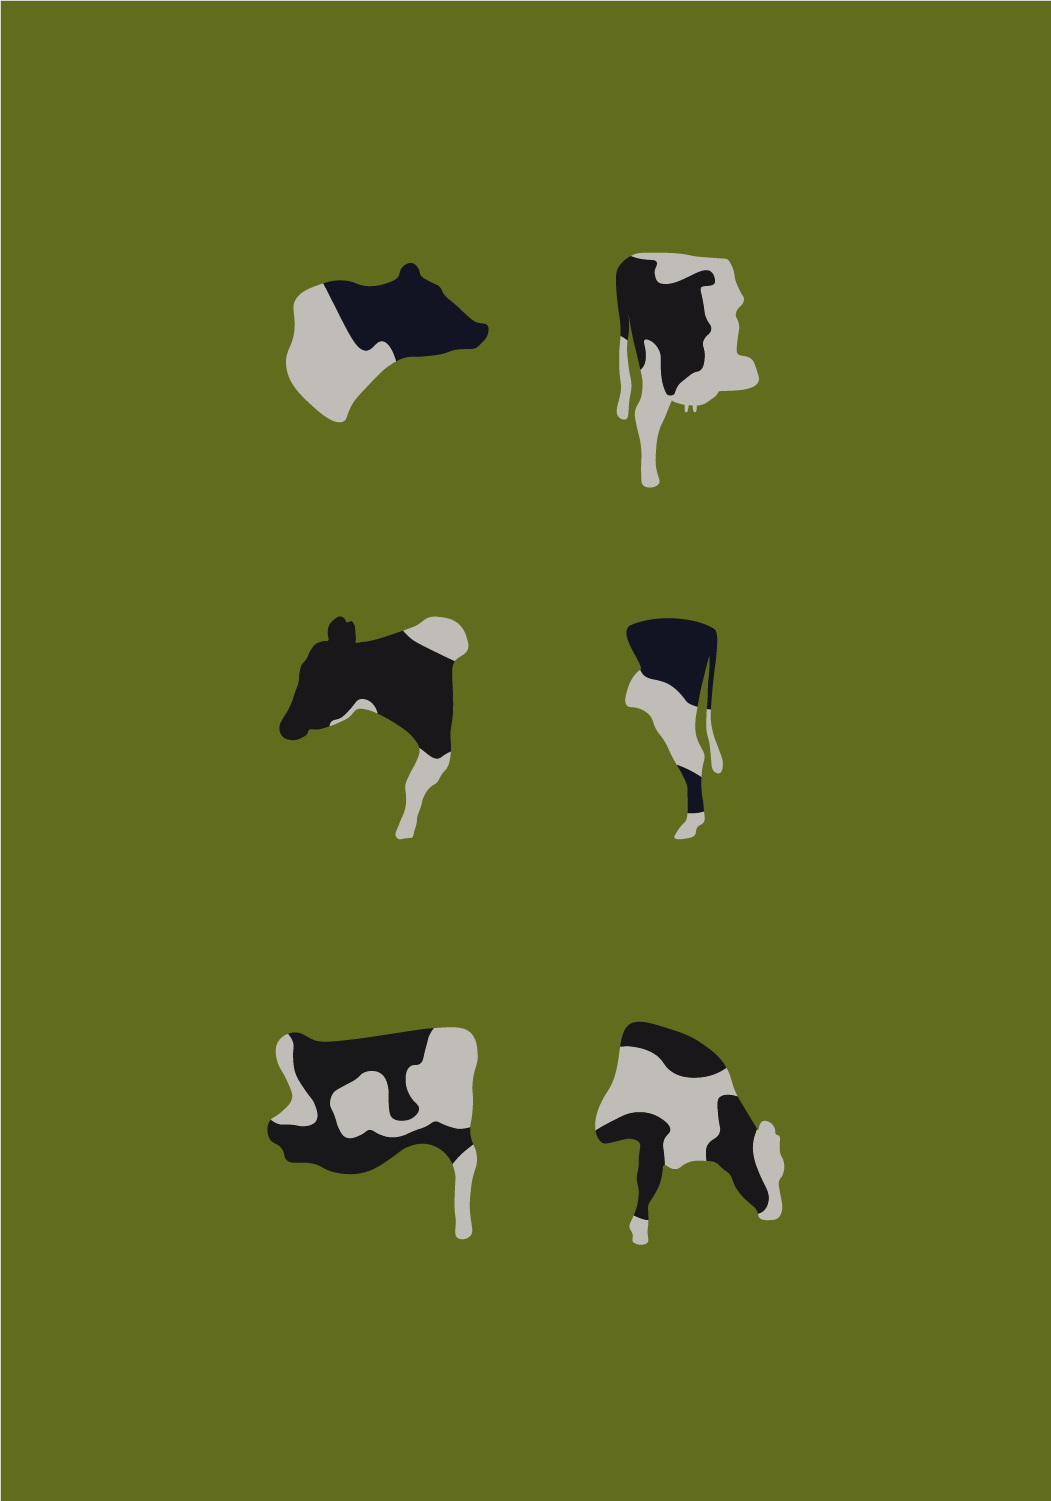 Digital Cows Grazing in the High Grass - illustration by Robert Fiszer